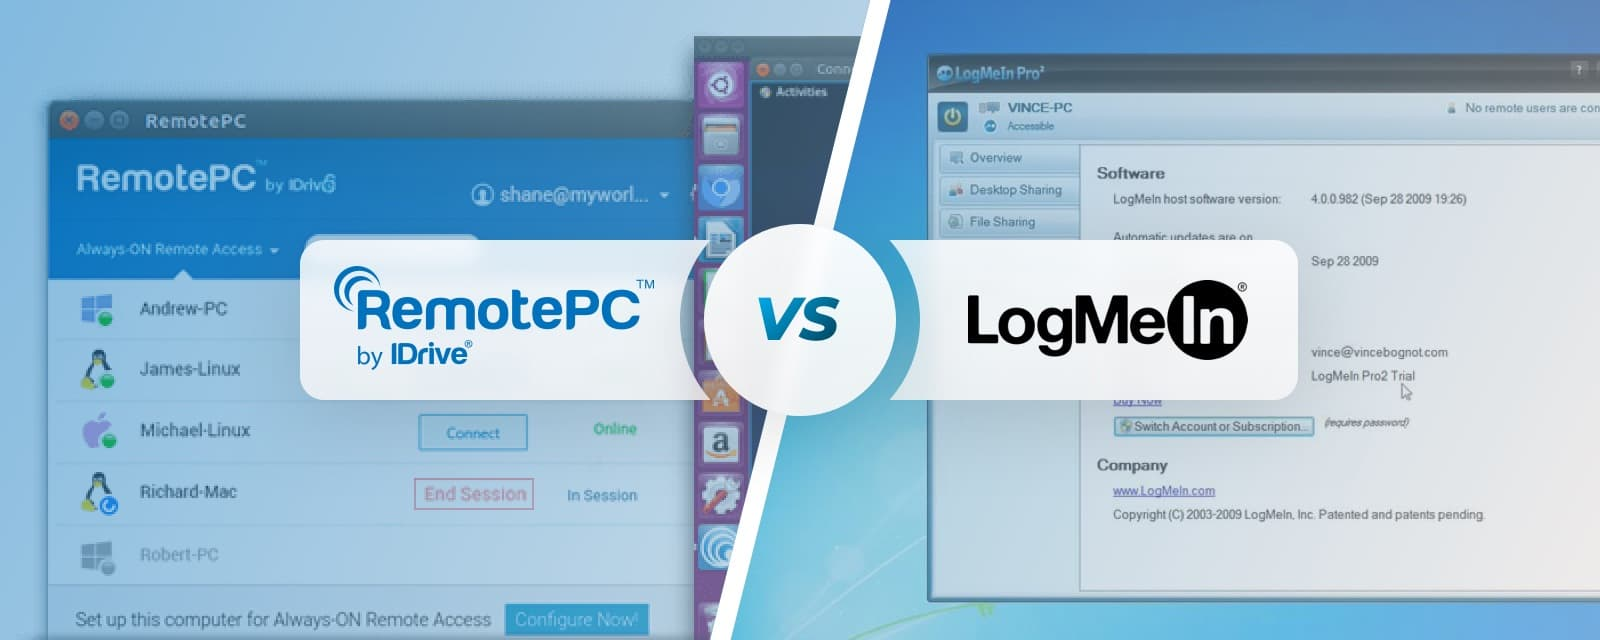 RemotePC vs LogMeIn